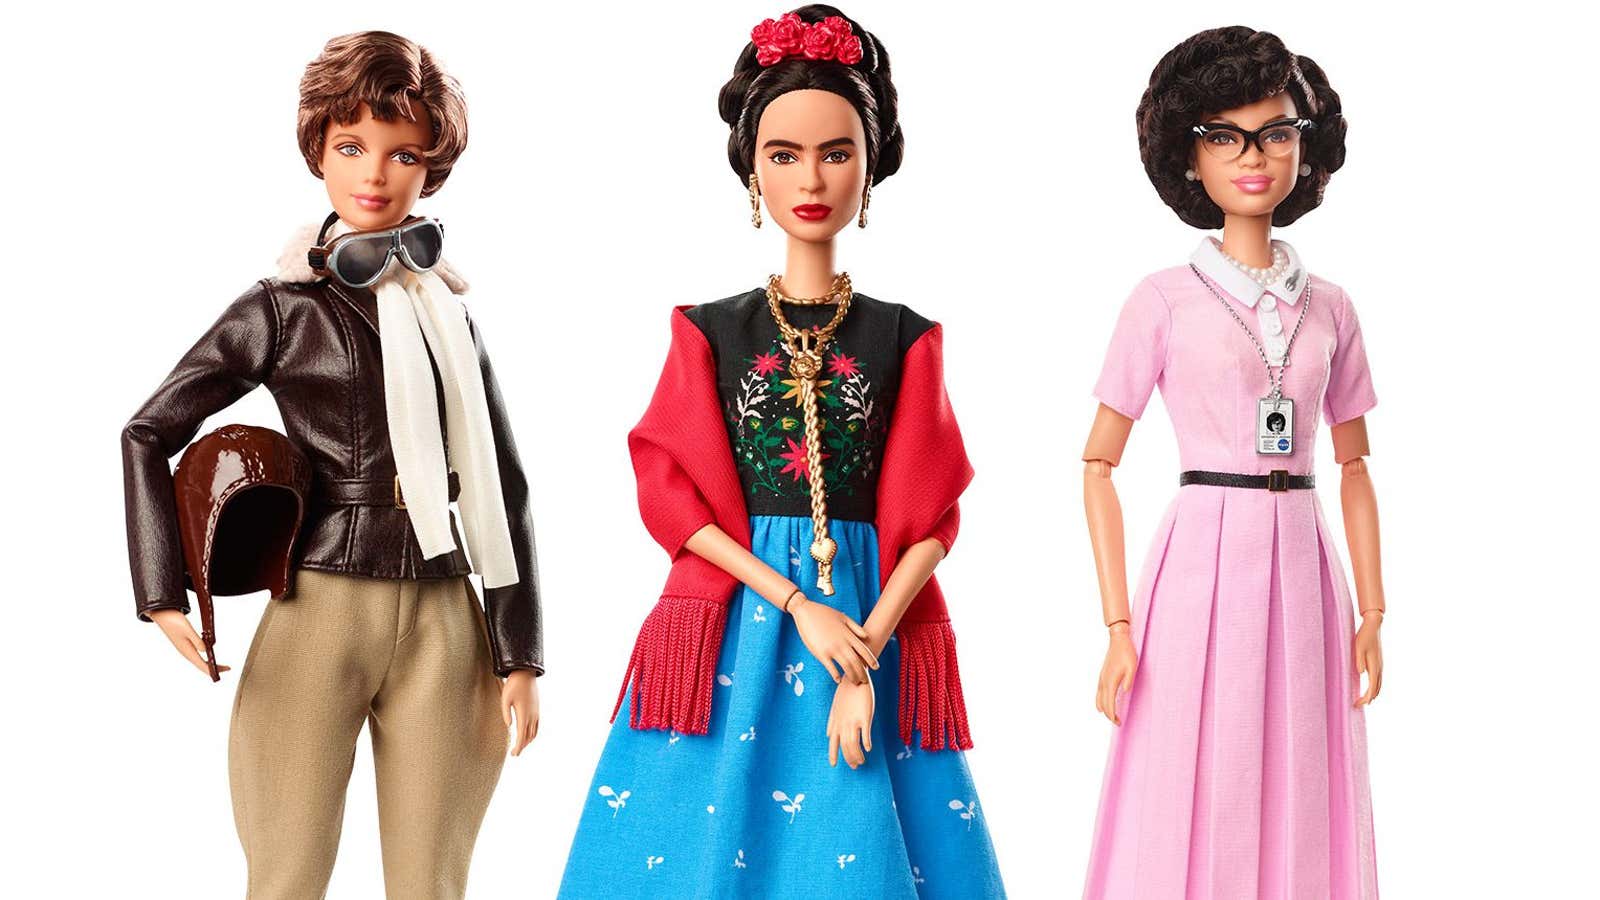 Amelia Earhart, Frida Kahlo, and Katherine Johnson as Barbie dolls.